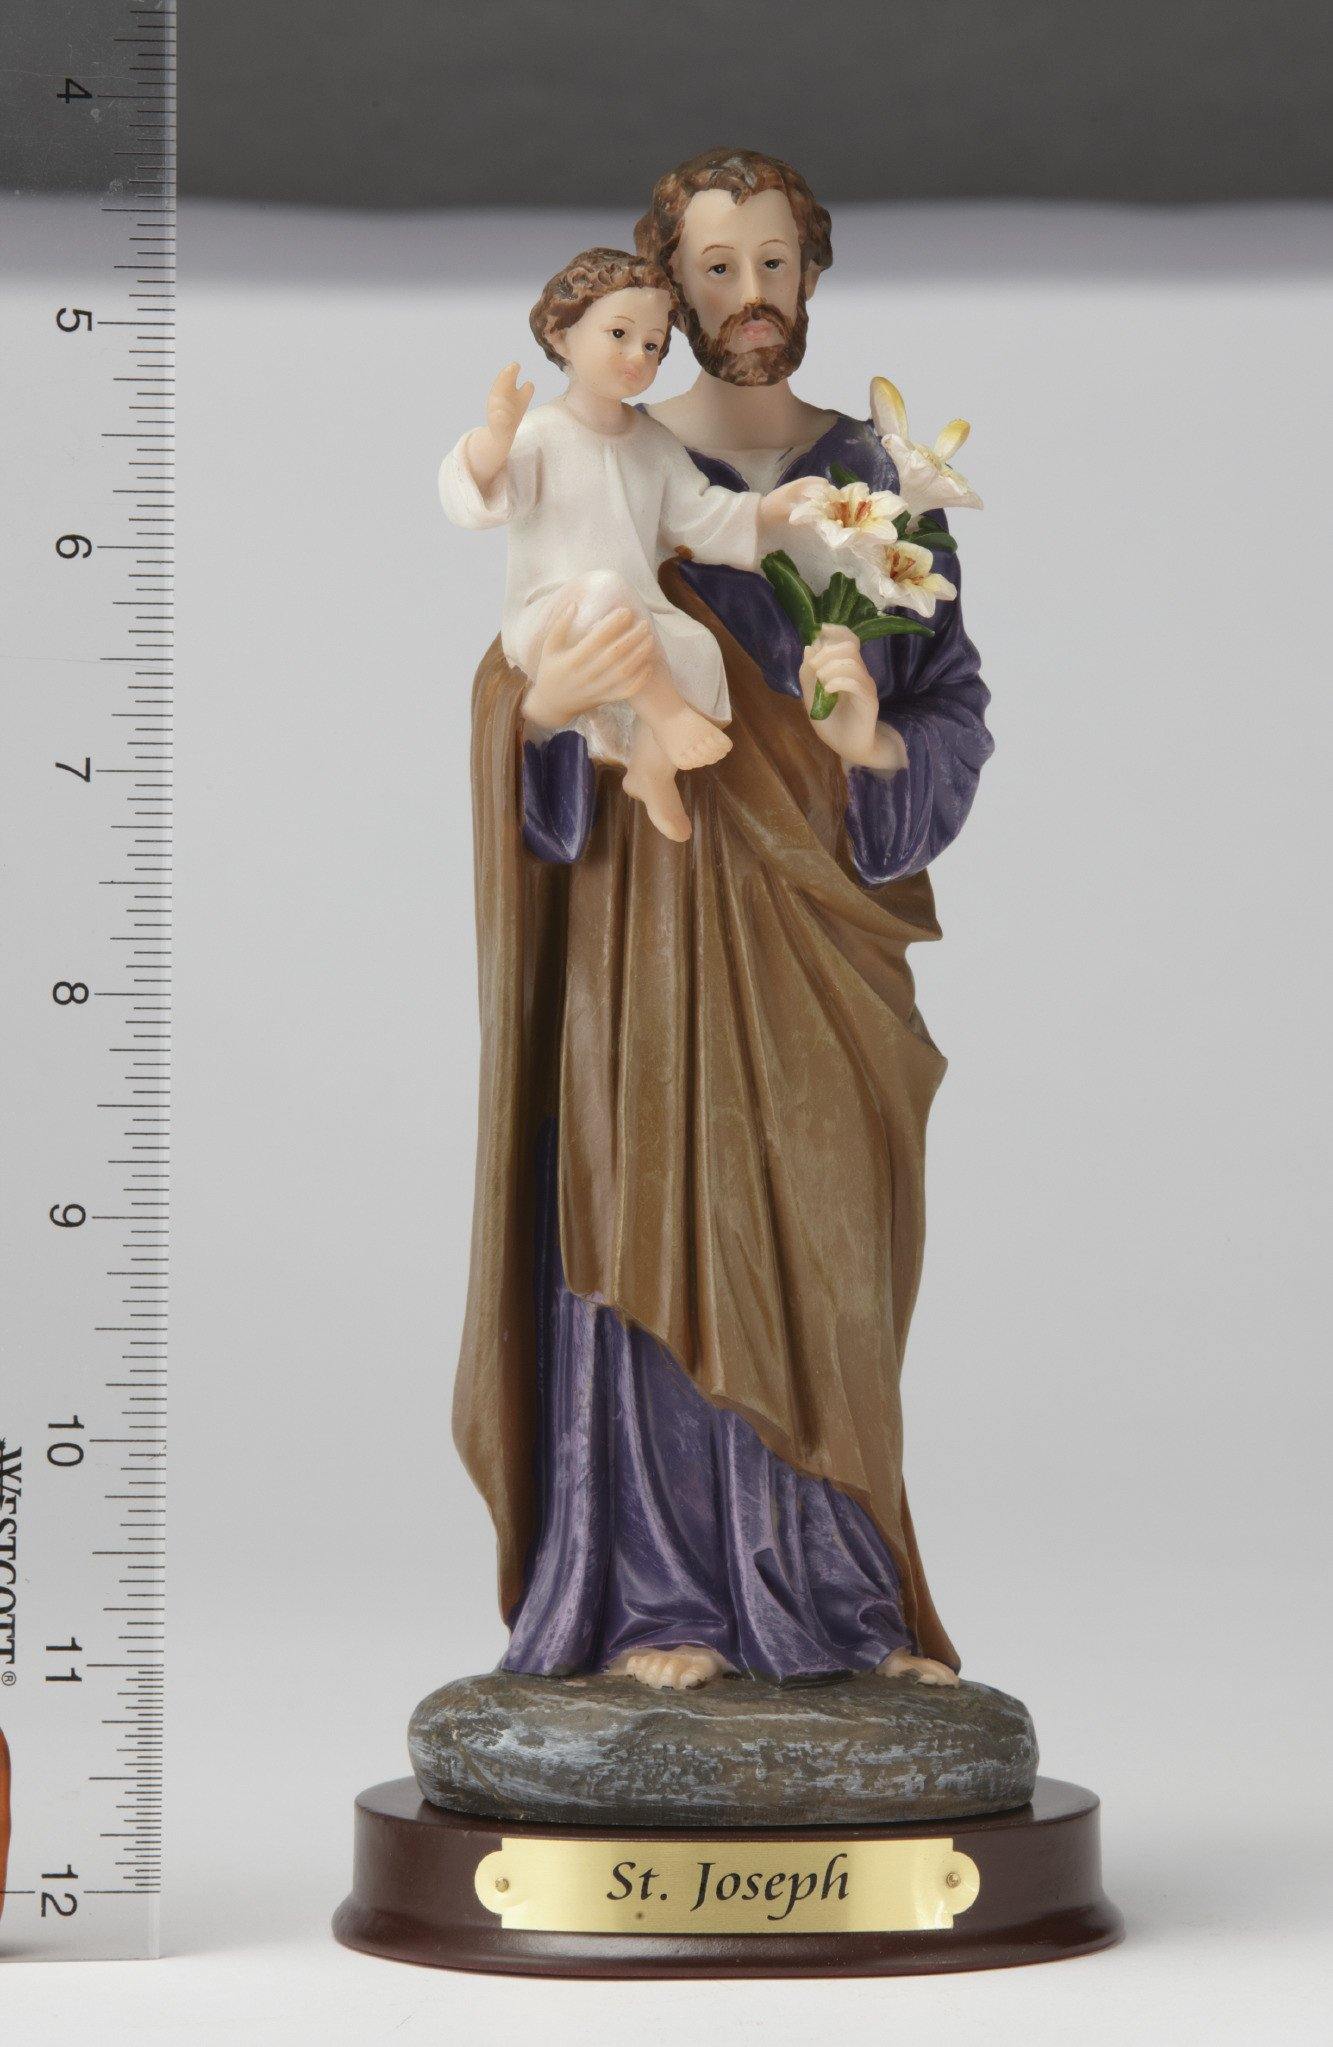 8" St. Joseph Statue - Hand Painted - Religious Art - Chiarelli's Religious Goods & Church Supply